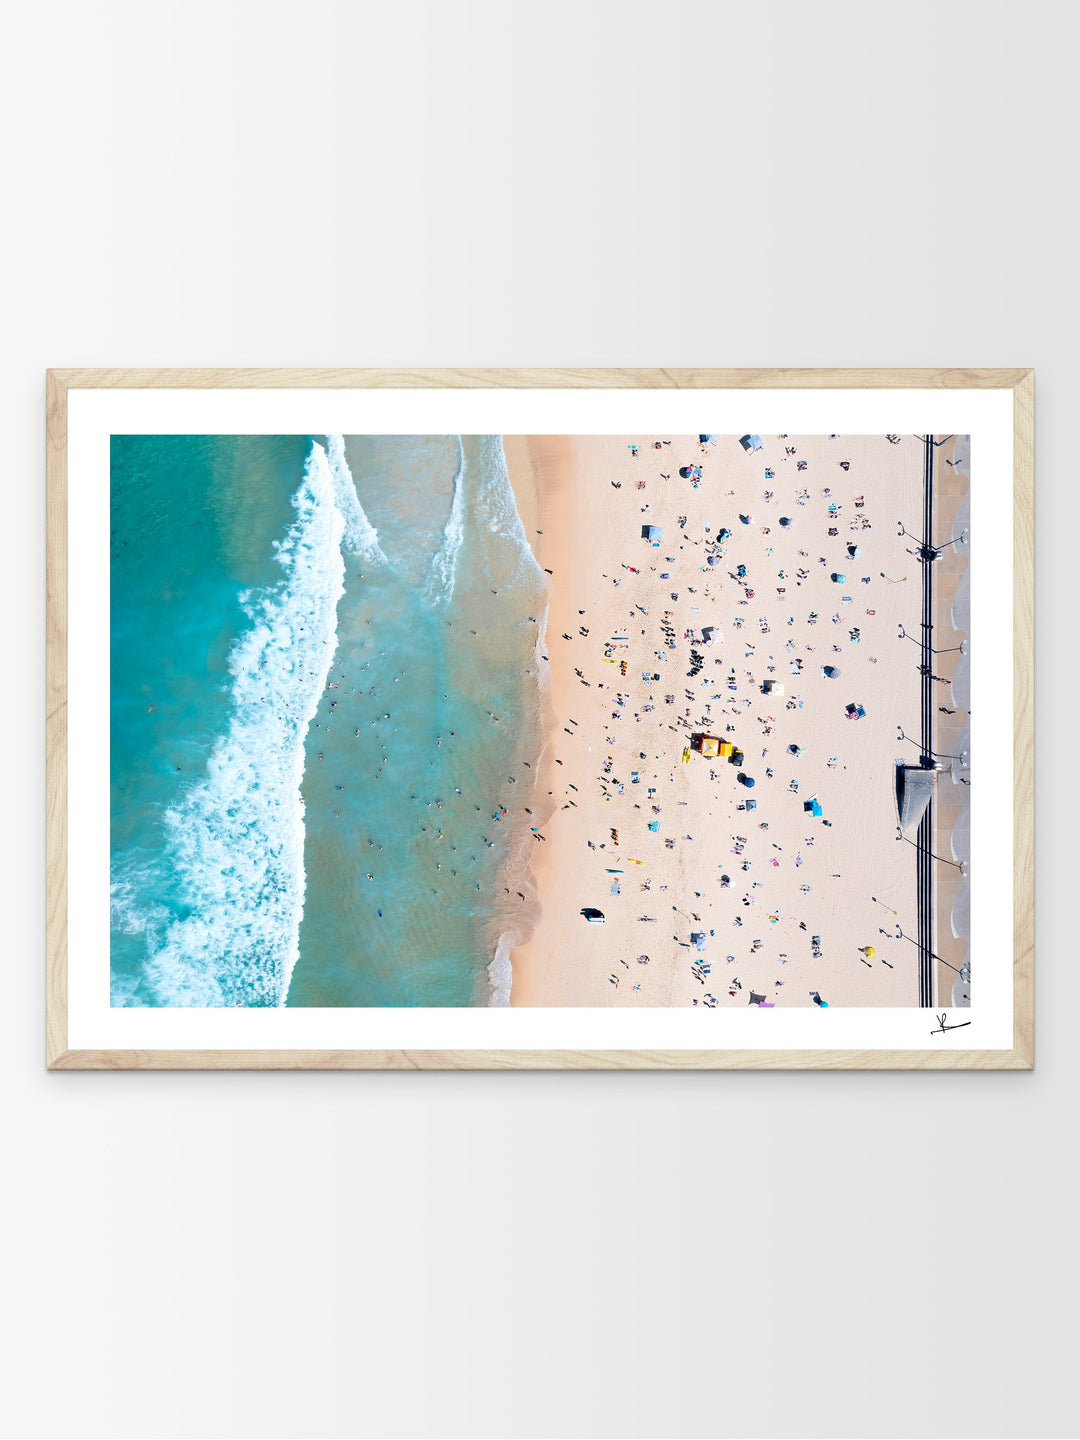 Maroubra Beach 02 - Australia Unseen - Wall Art Print